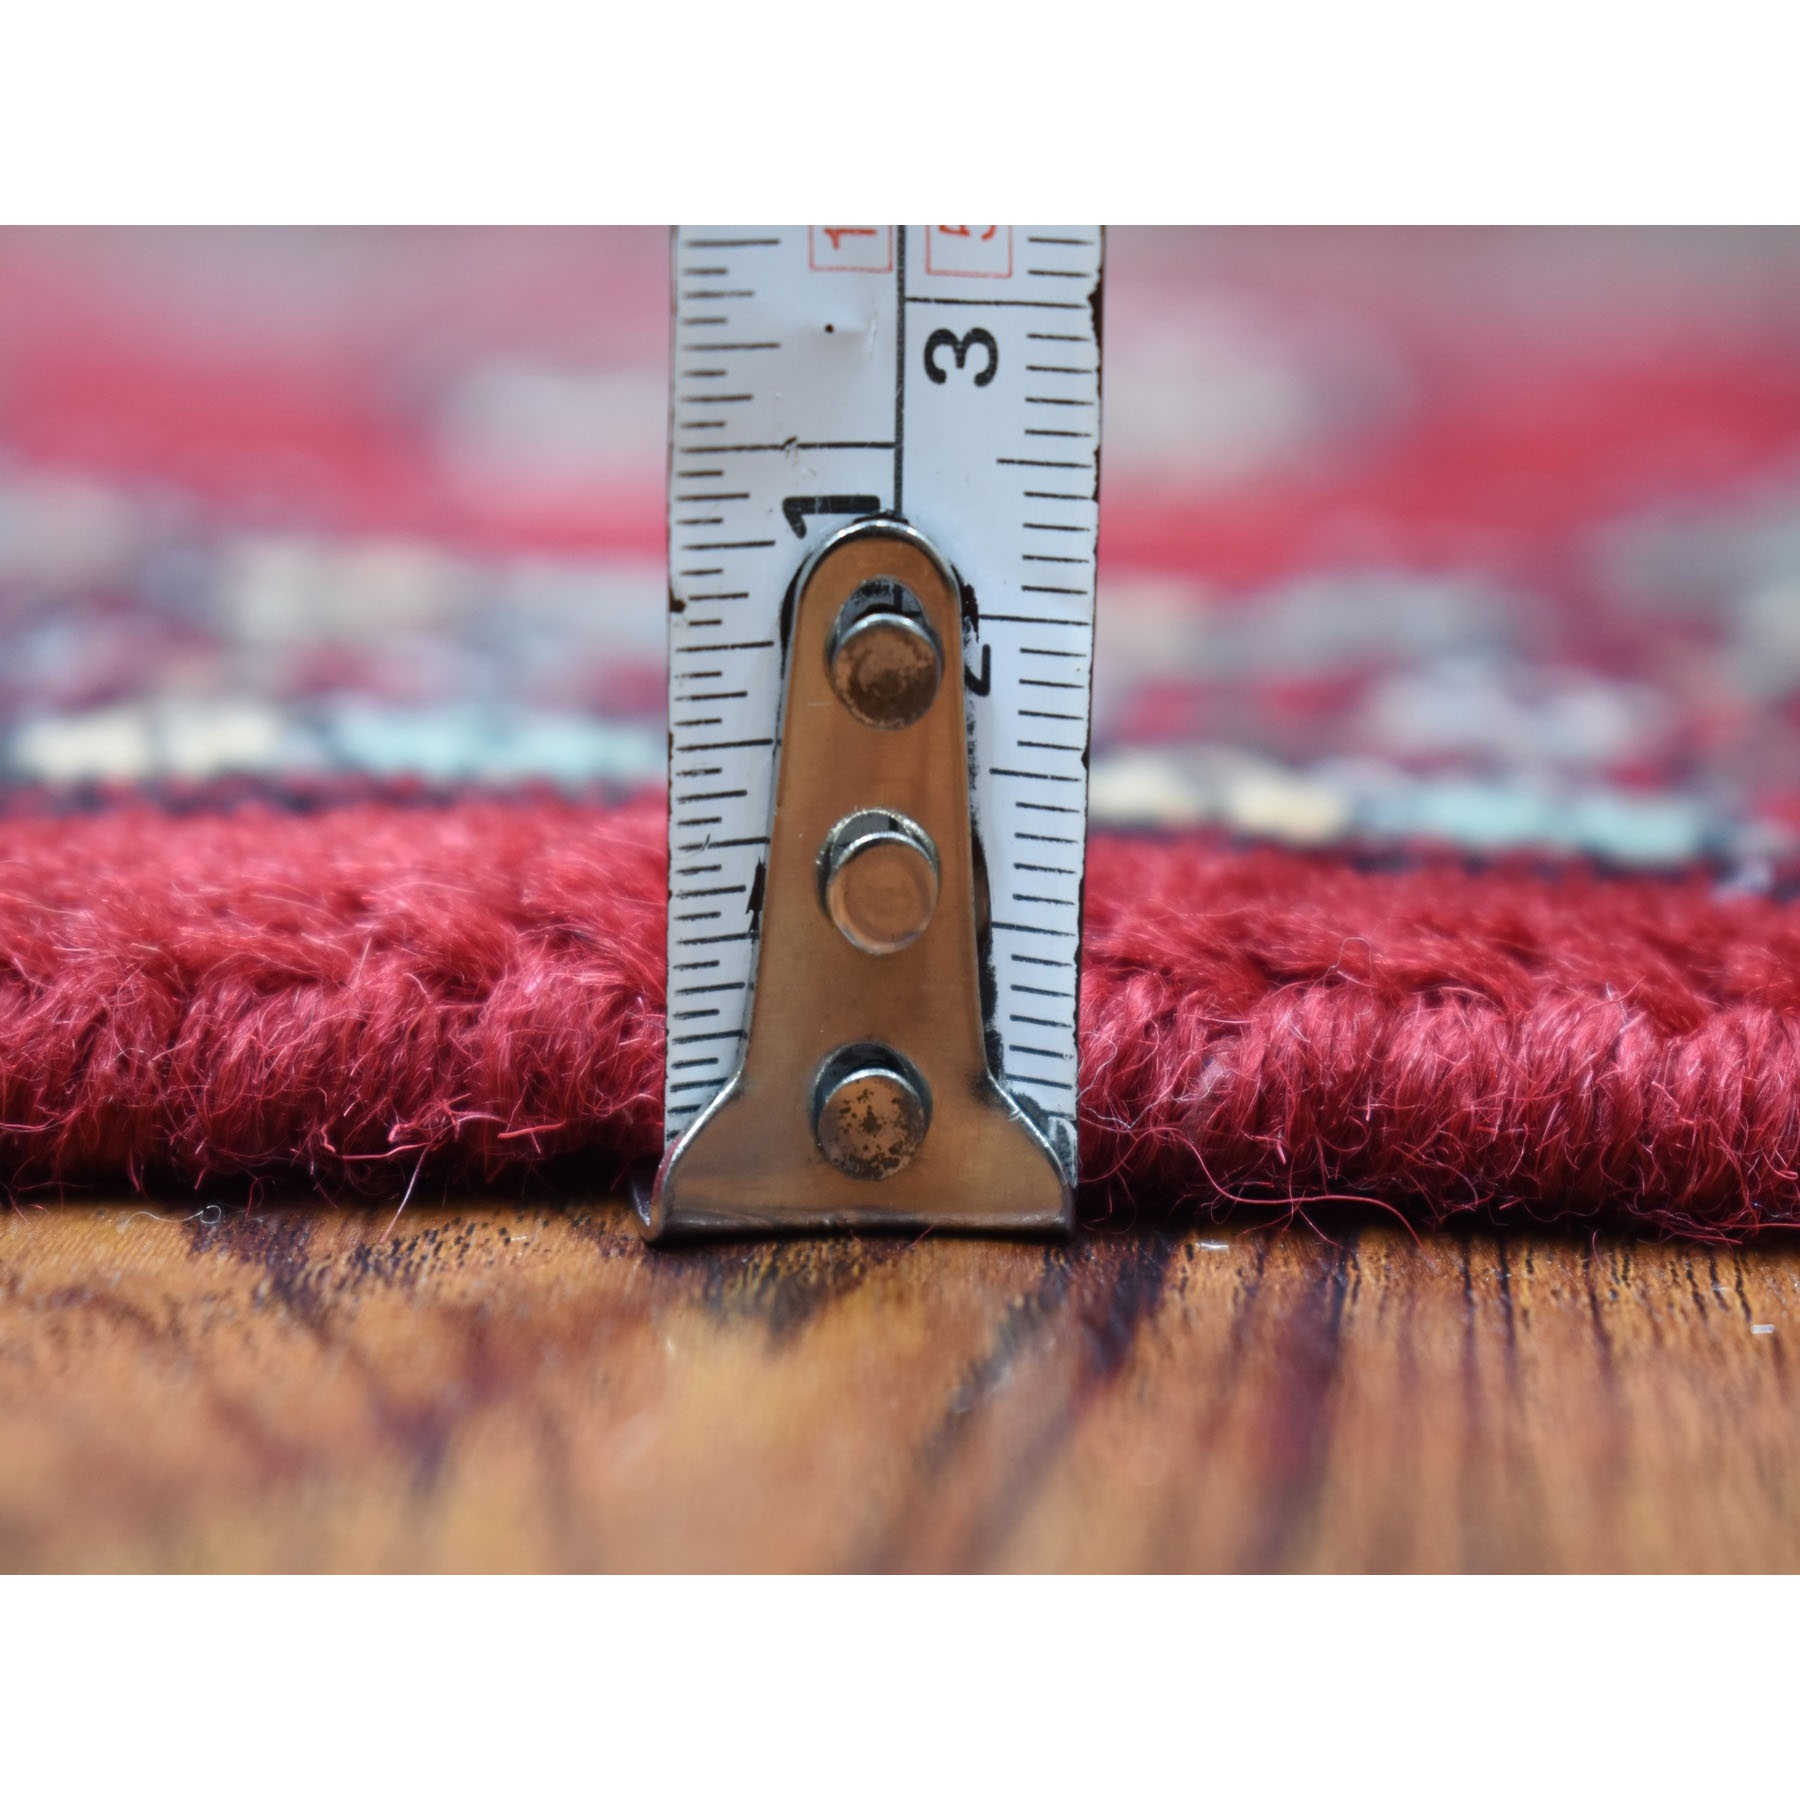 2'6"x3'10" Hand Woven Rich Red Mori Bokara Silky Wool Oriental Rug 